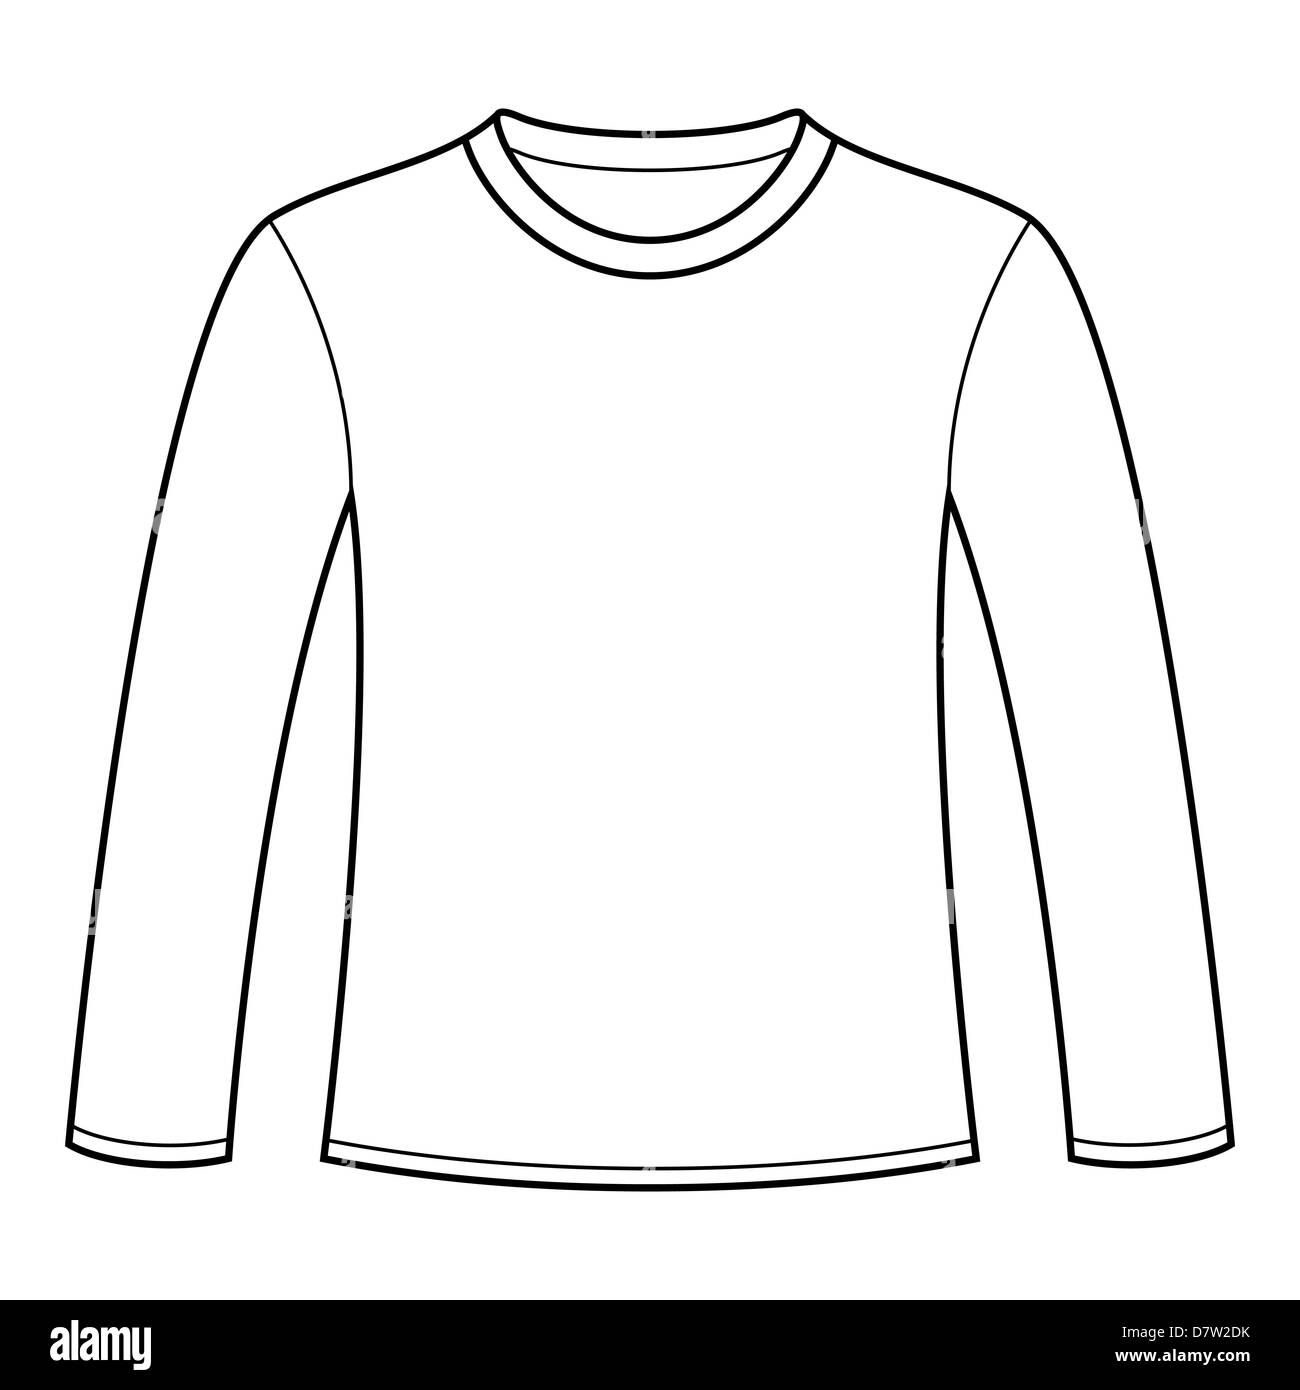 Camisas de manga larga T-shirt plantilla Fotografía de stock - Alamy